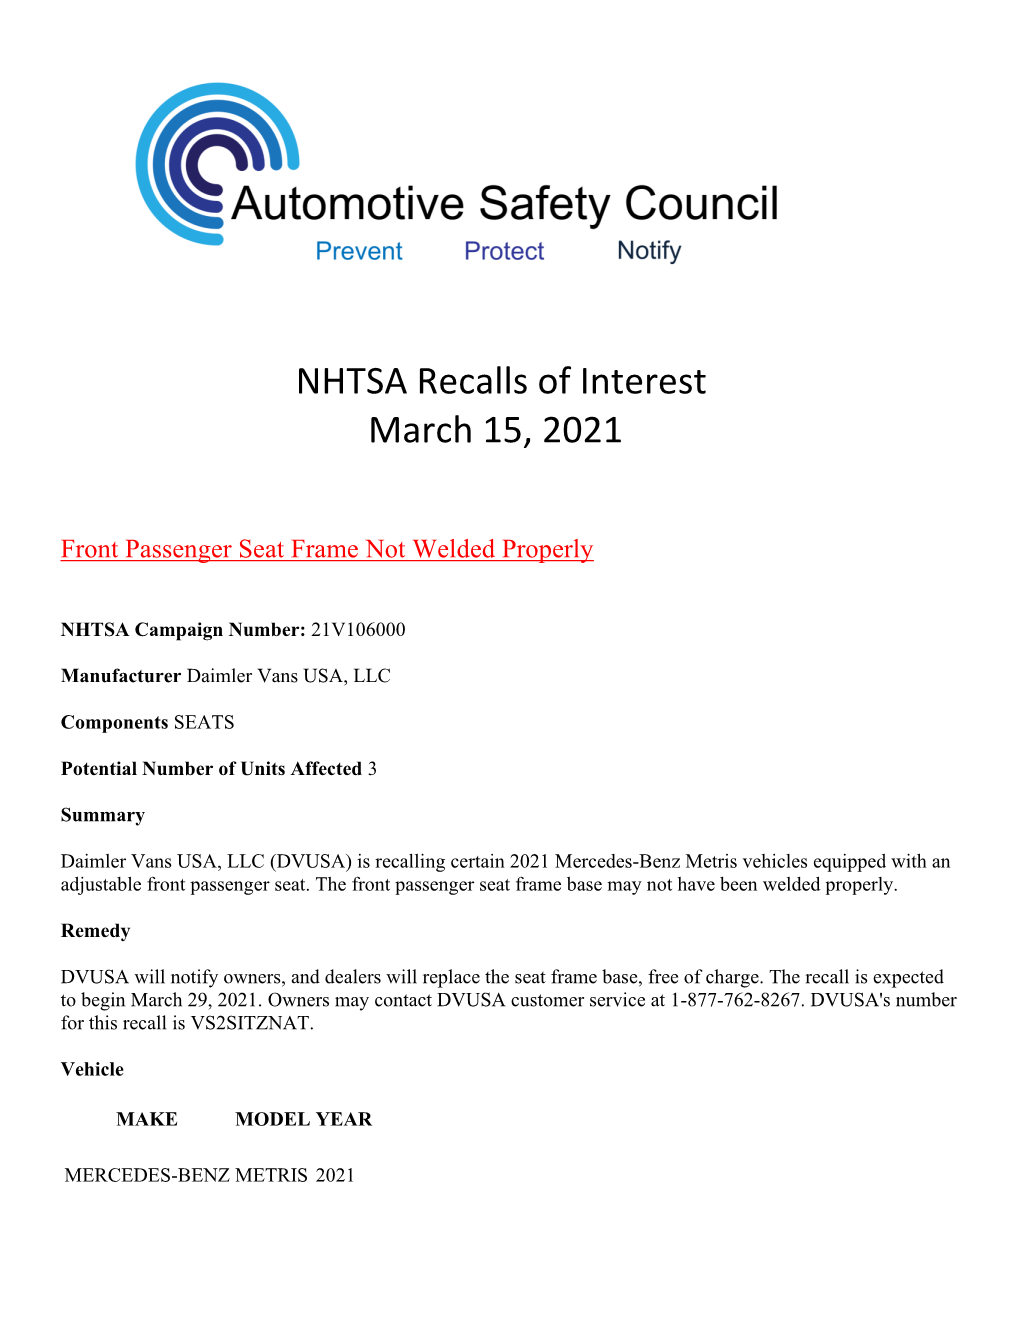 NHTSA Recalls of Interest March 15, 2021